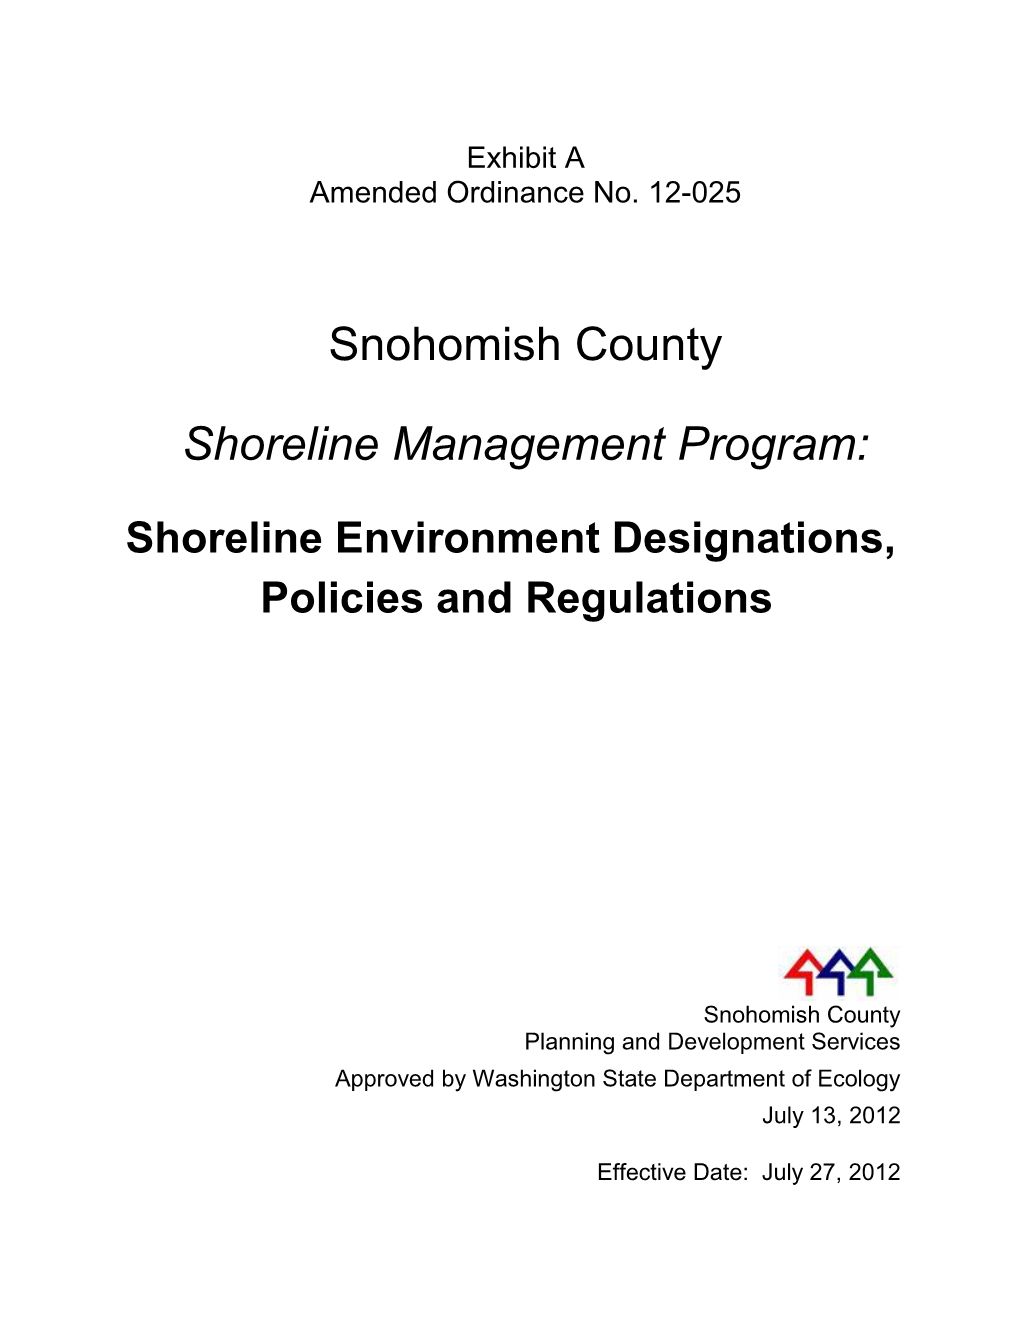 Shoreline Environment Designations, Policies and Regulations